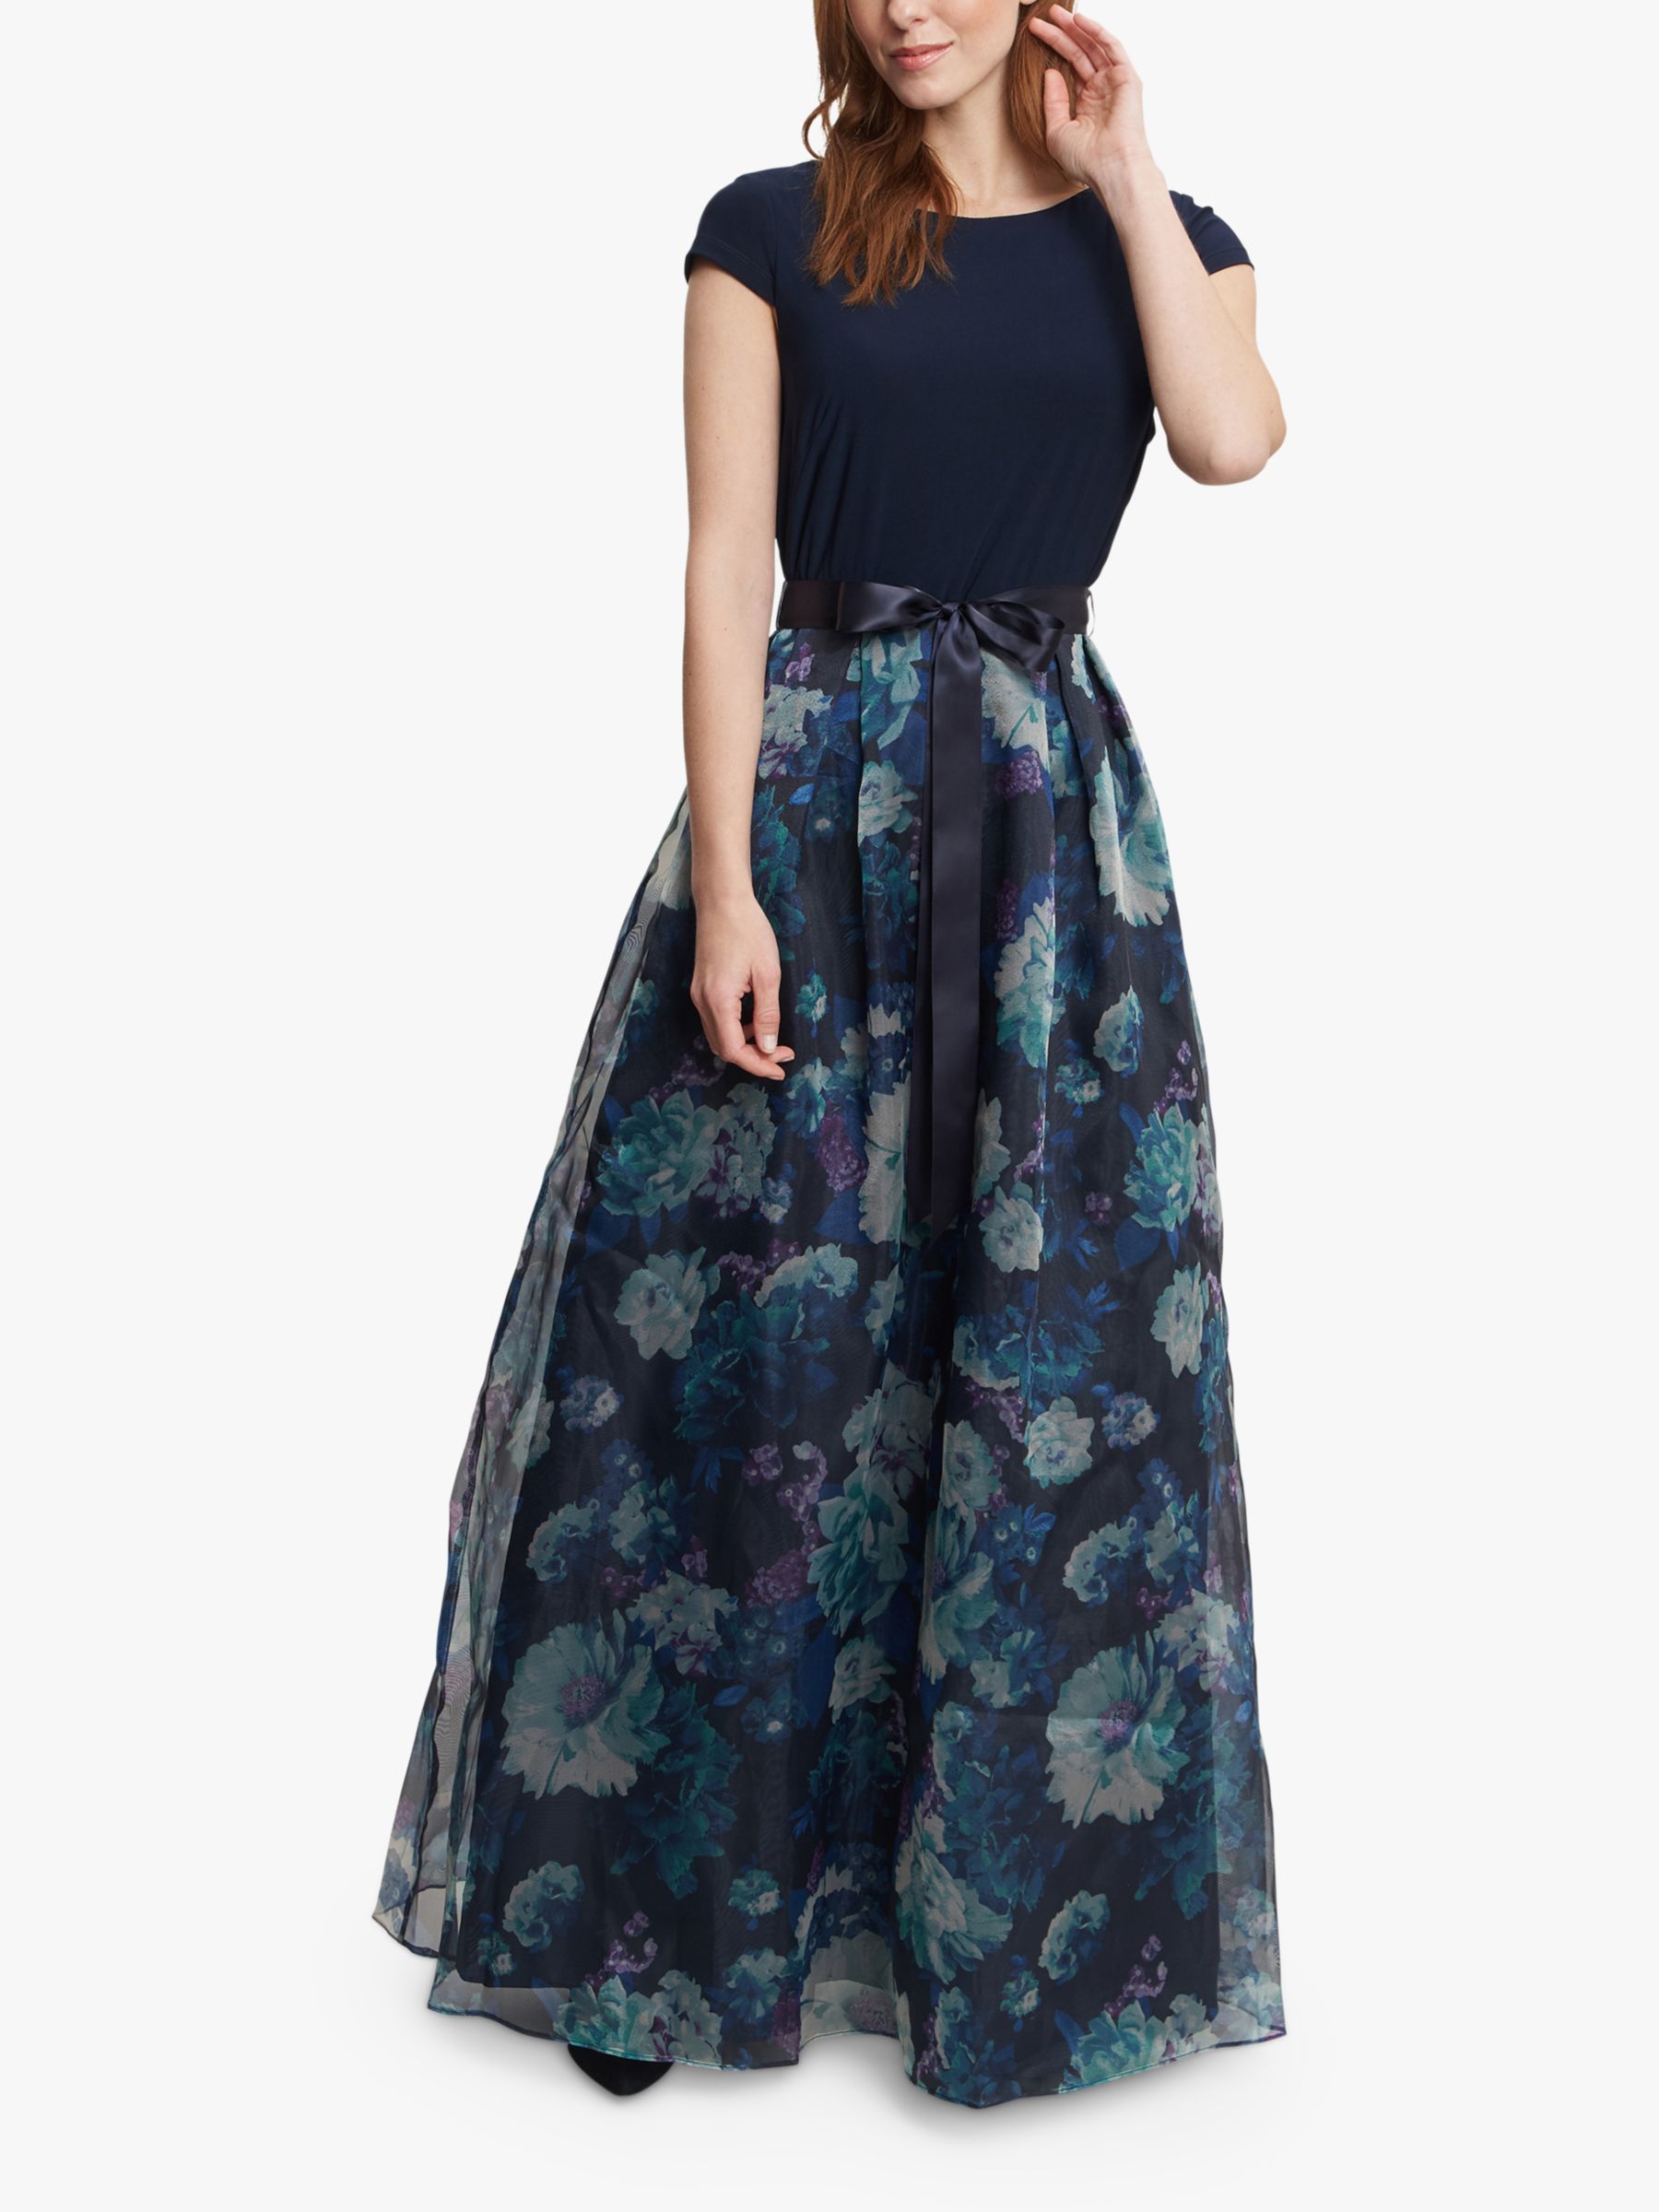 Gina Bacconi Avree Floral Print Maxi Gown, Navy/Multi, 14